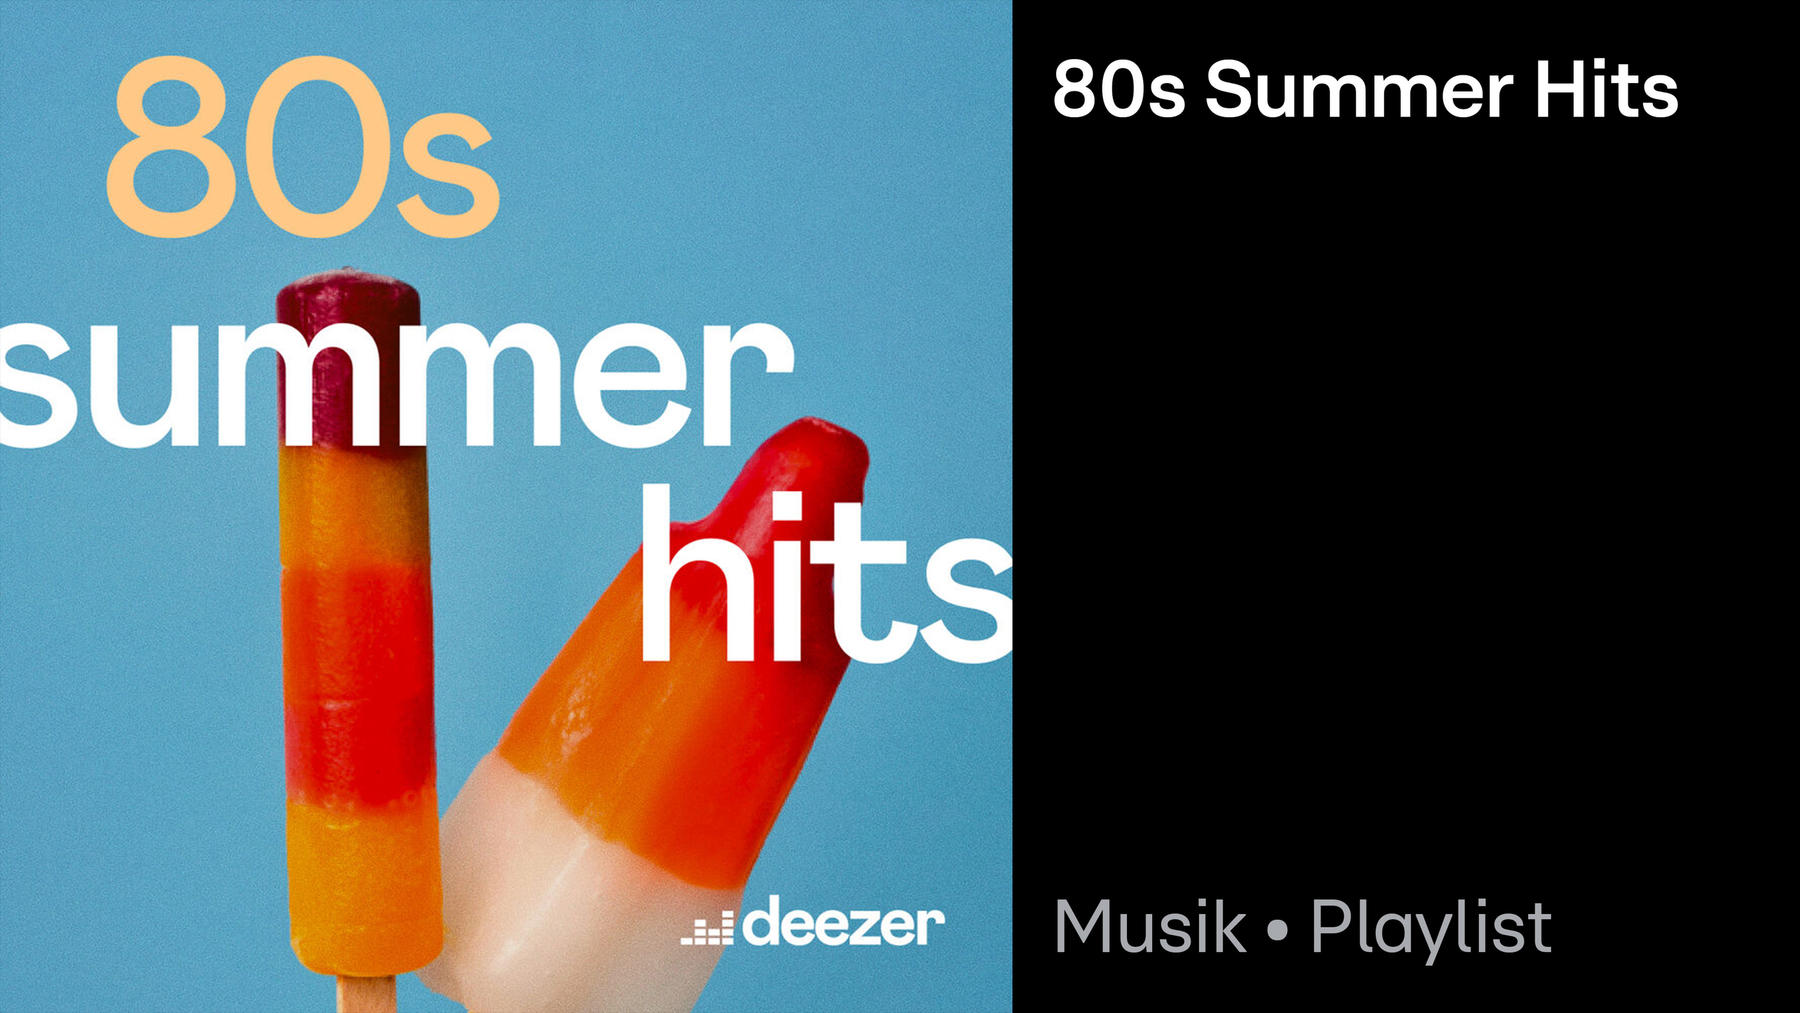 80s Summer Hits Playlist